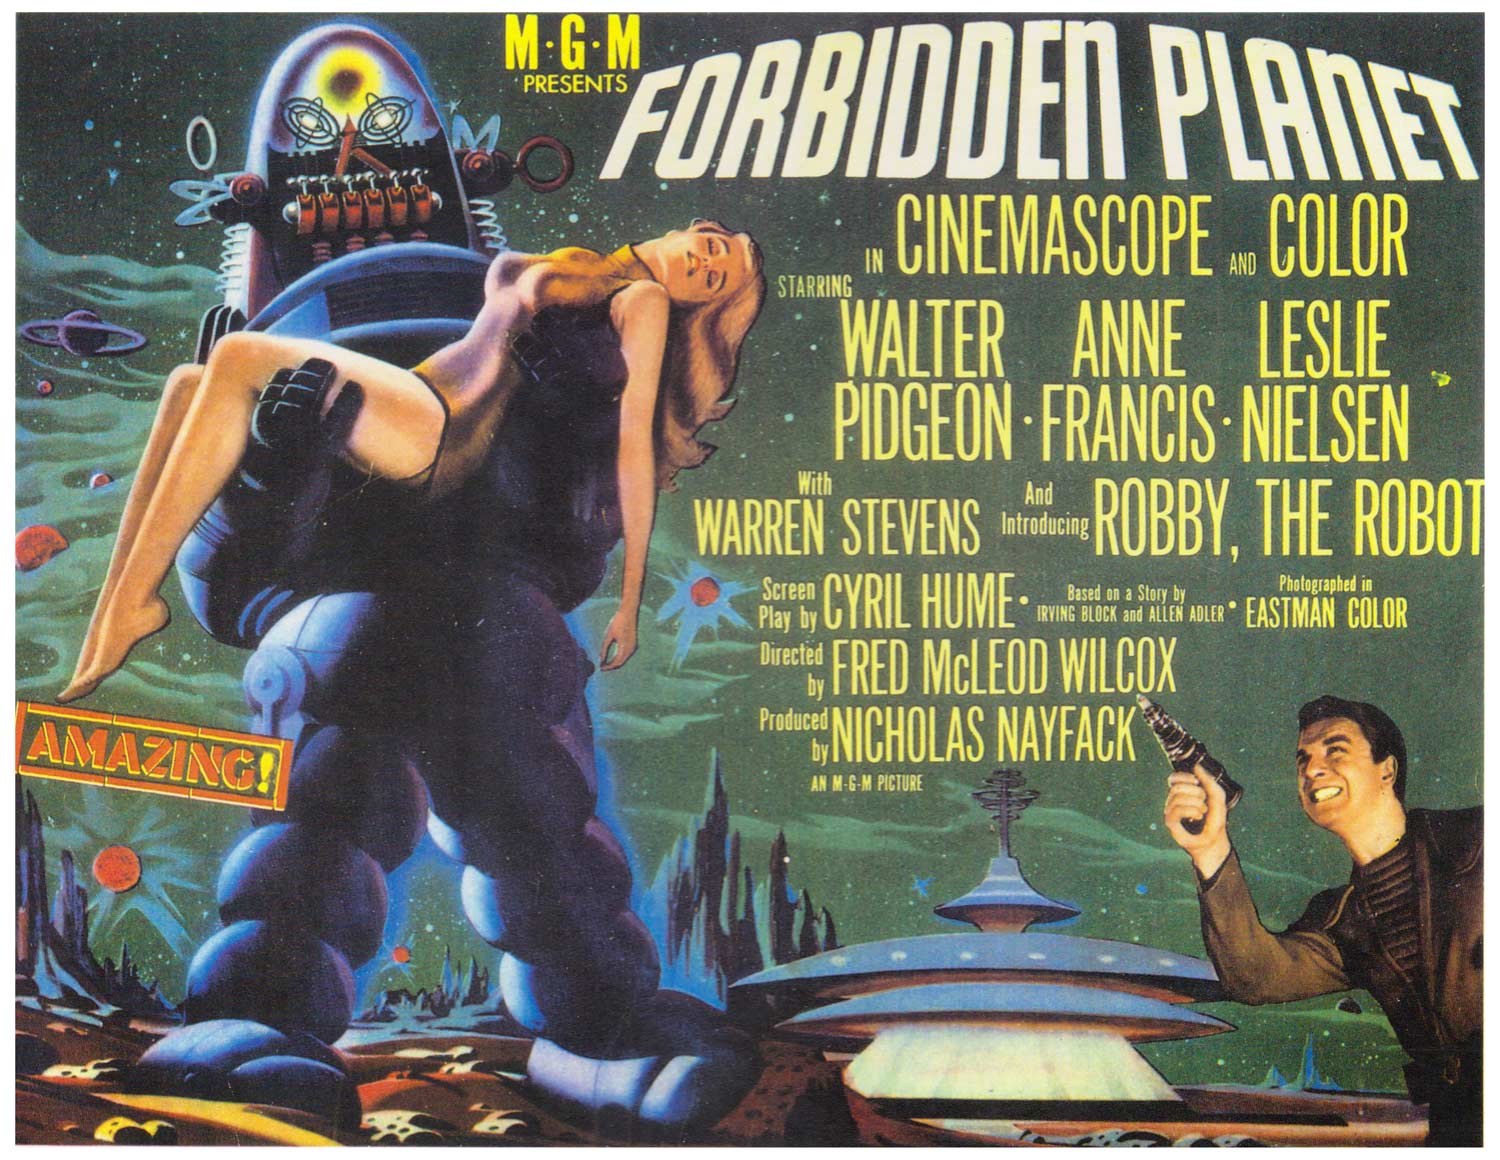 Forbidden Planet, Science Fiction, Sci-Fi, Classic